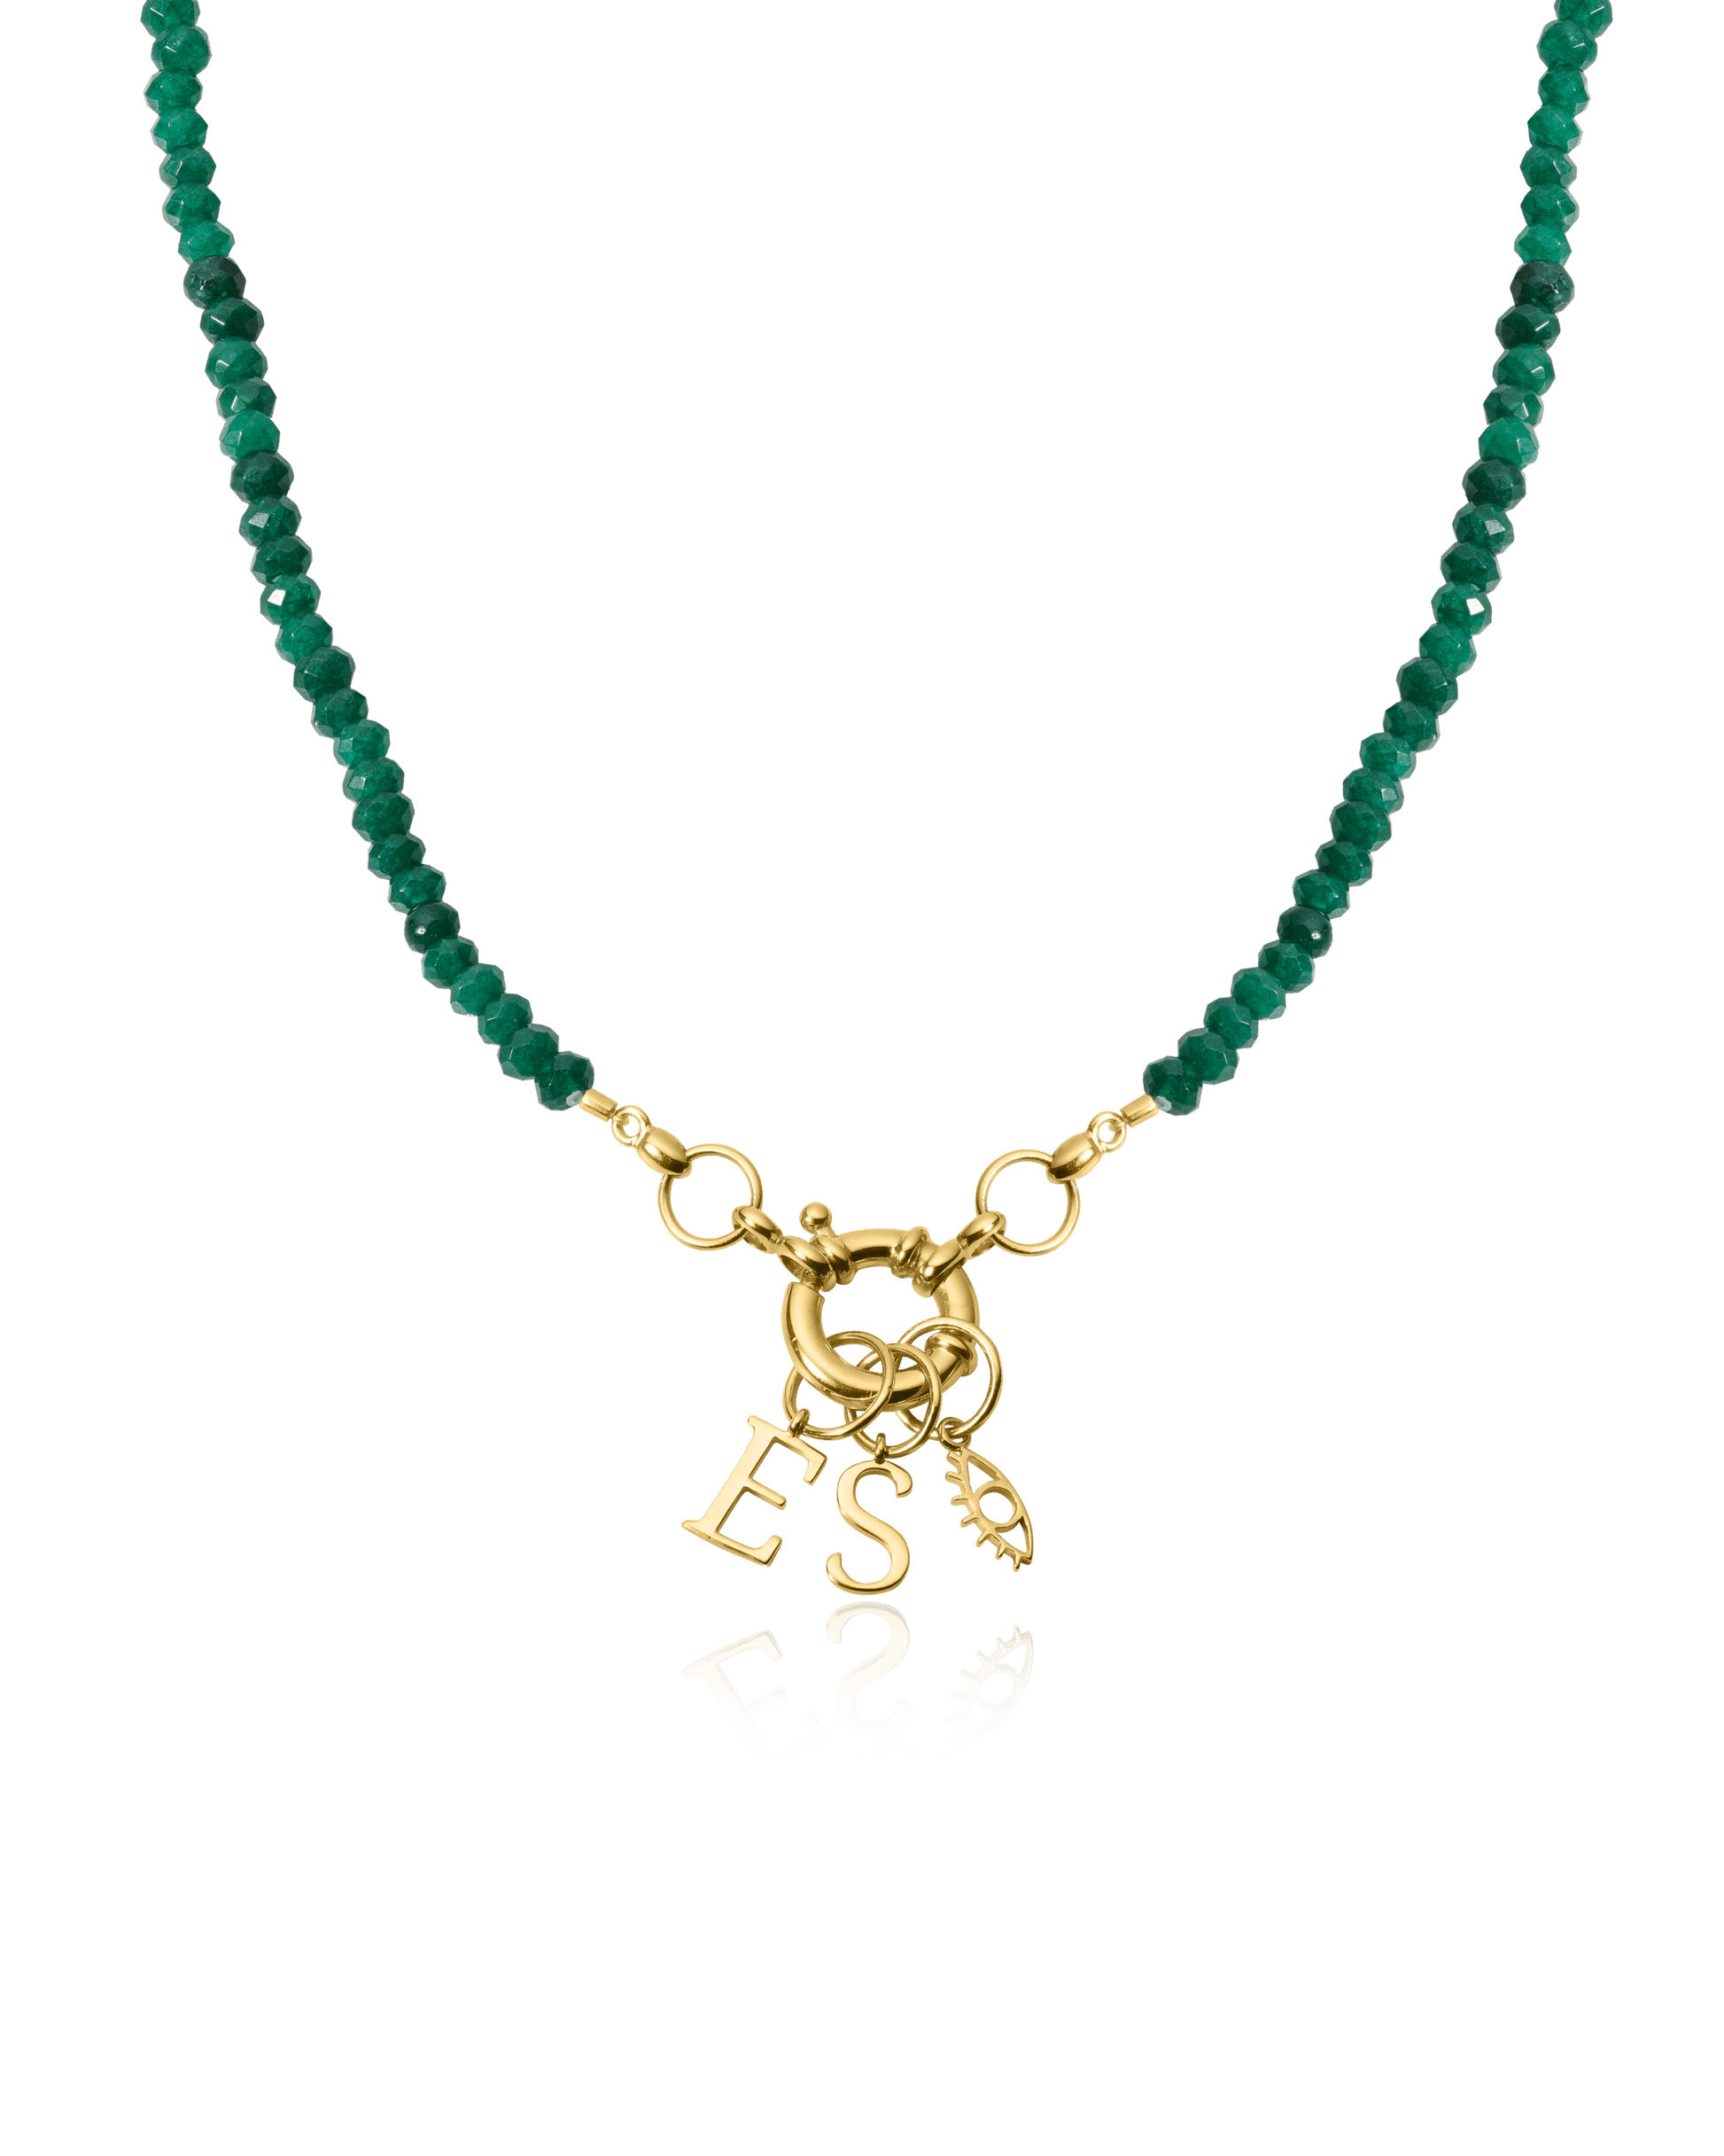 Pearl Charm Lock Necklace - 18K Gold Vermeil Necklaces magal-dev Green Jade Gemstones 1 Charm 16"